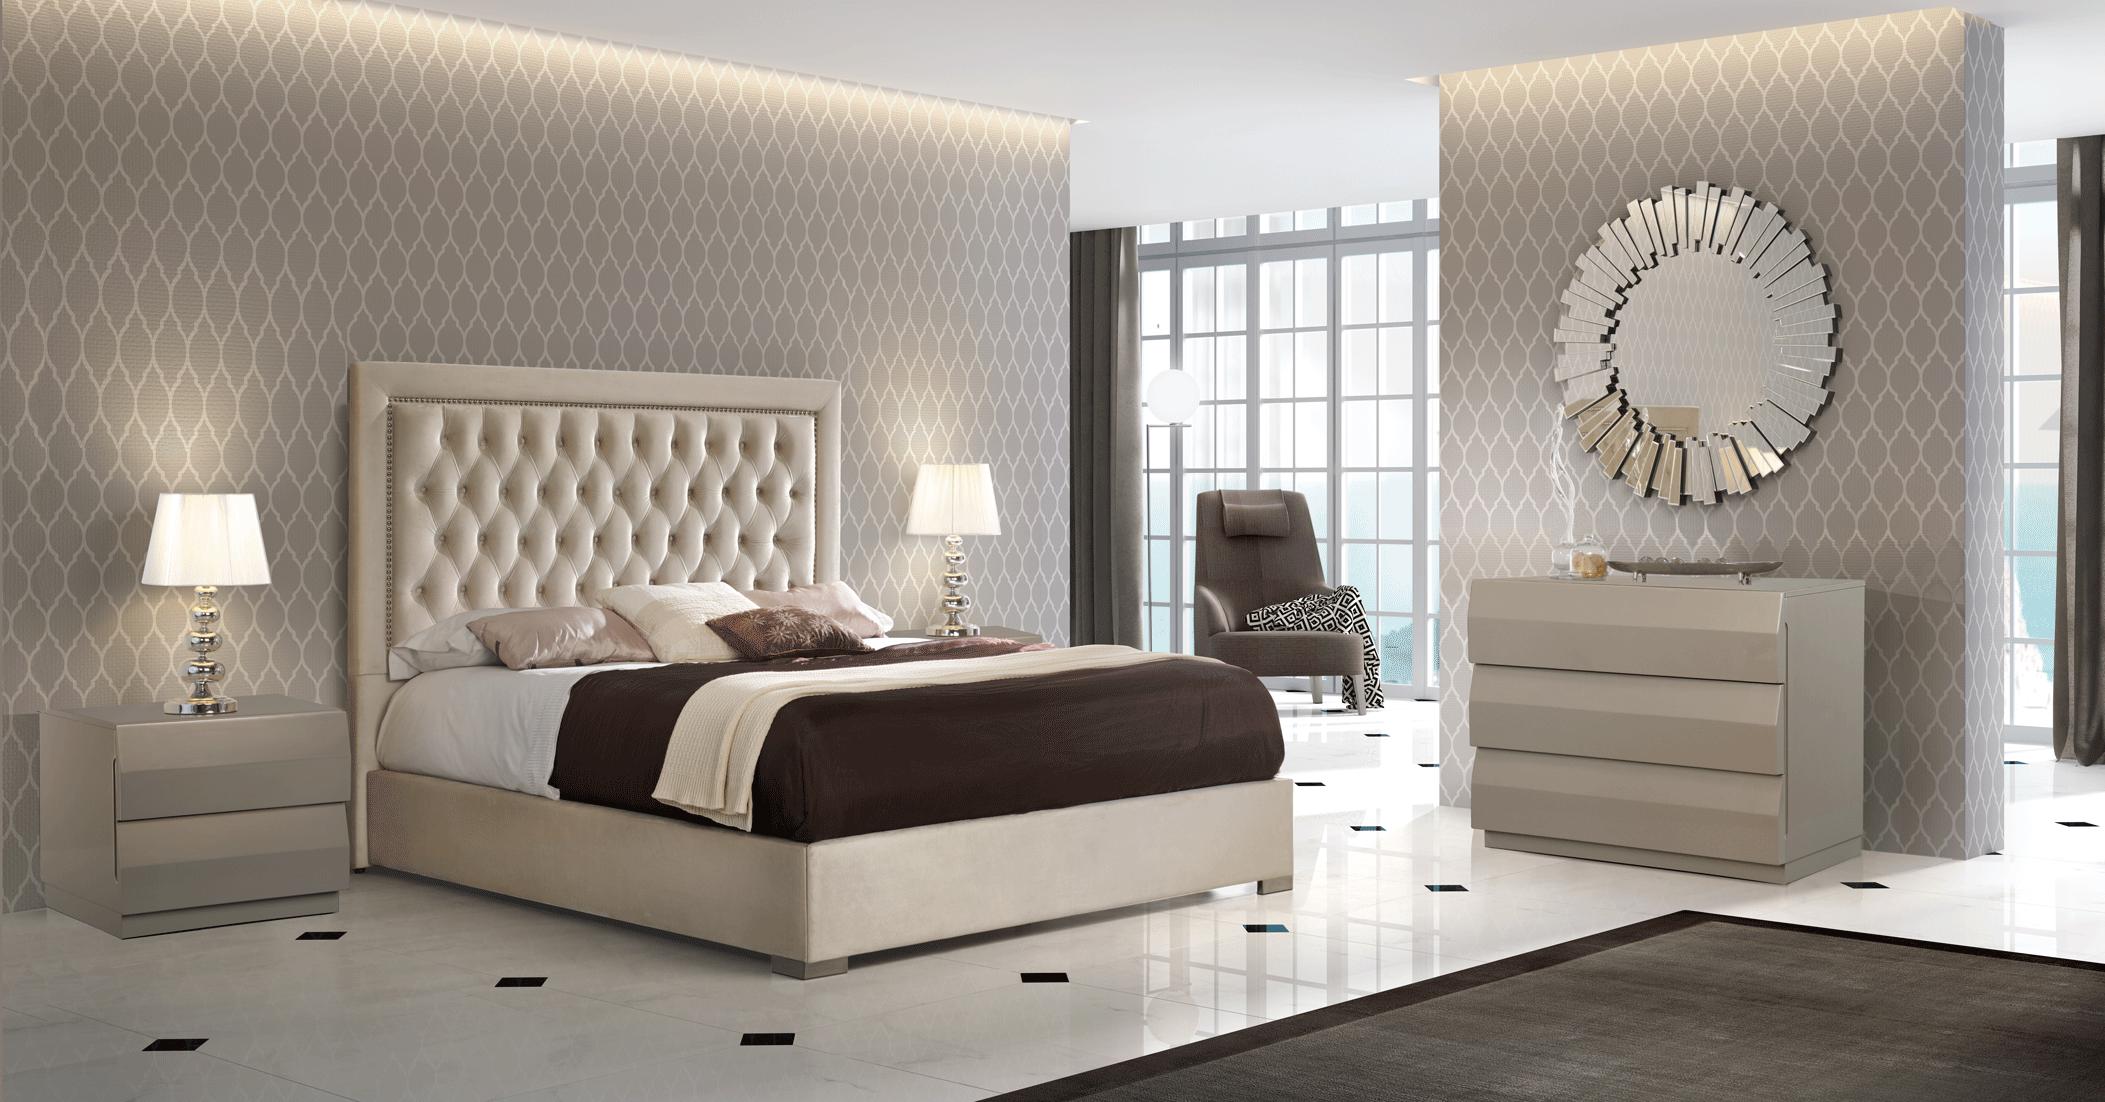 Contemporary, Modern Storage Bedroom Set ADAGIOBEDKS ADAGIOBEDKS-2NDM-5PC in Champagne, Beige Microfiber